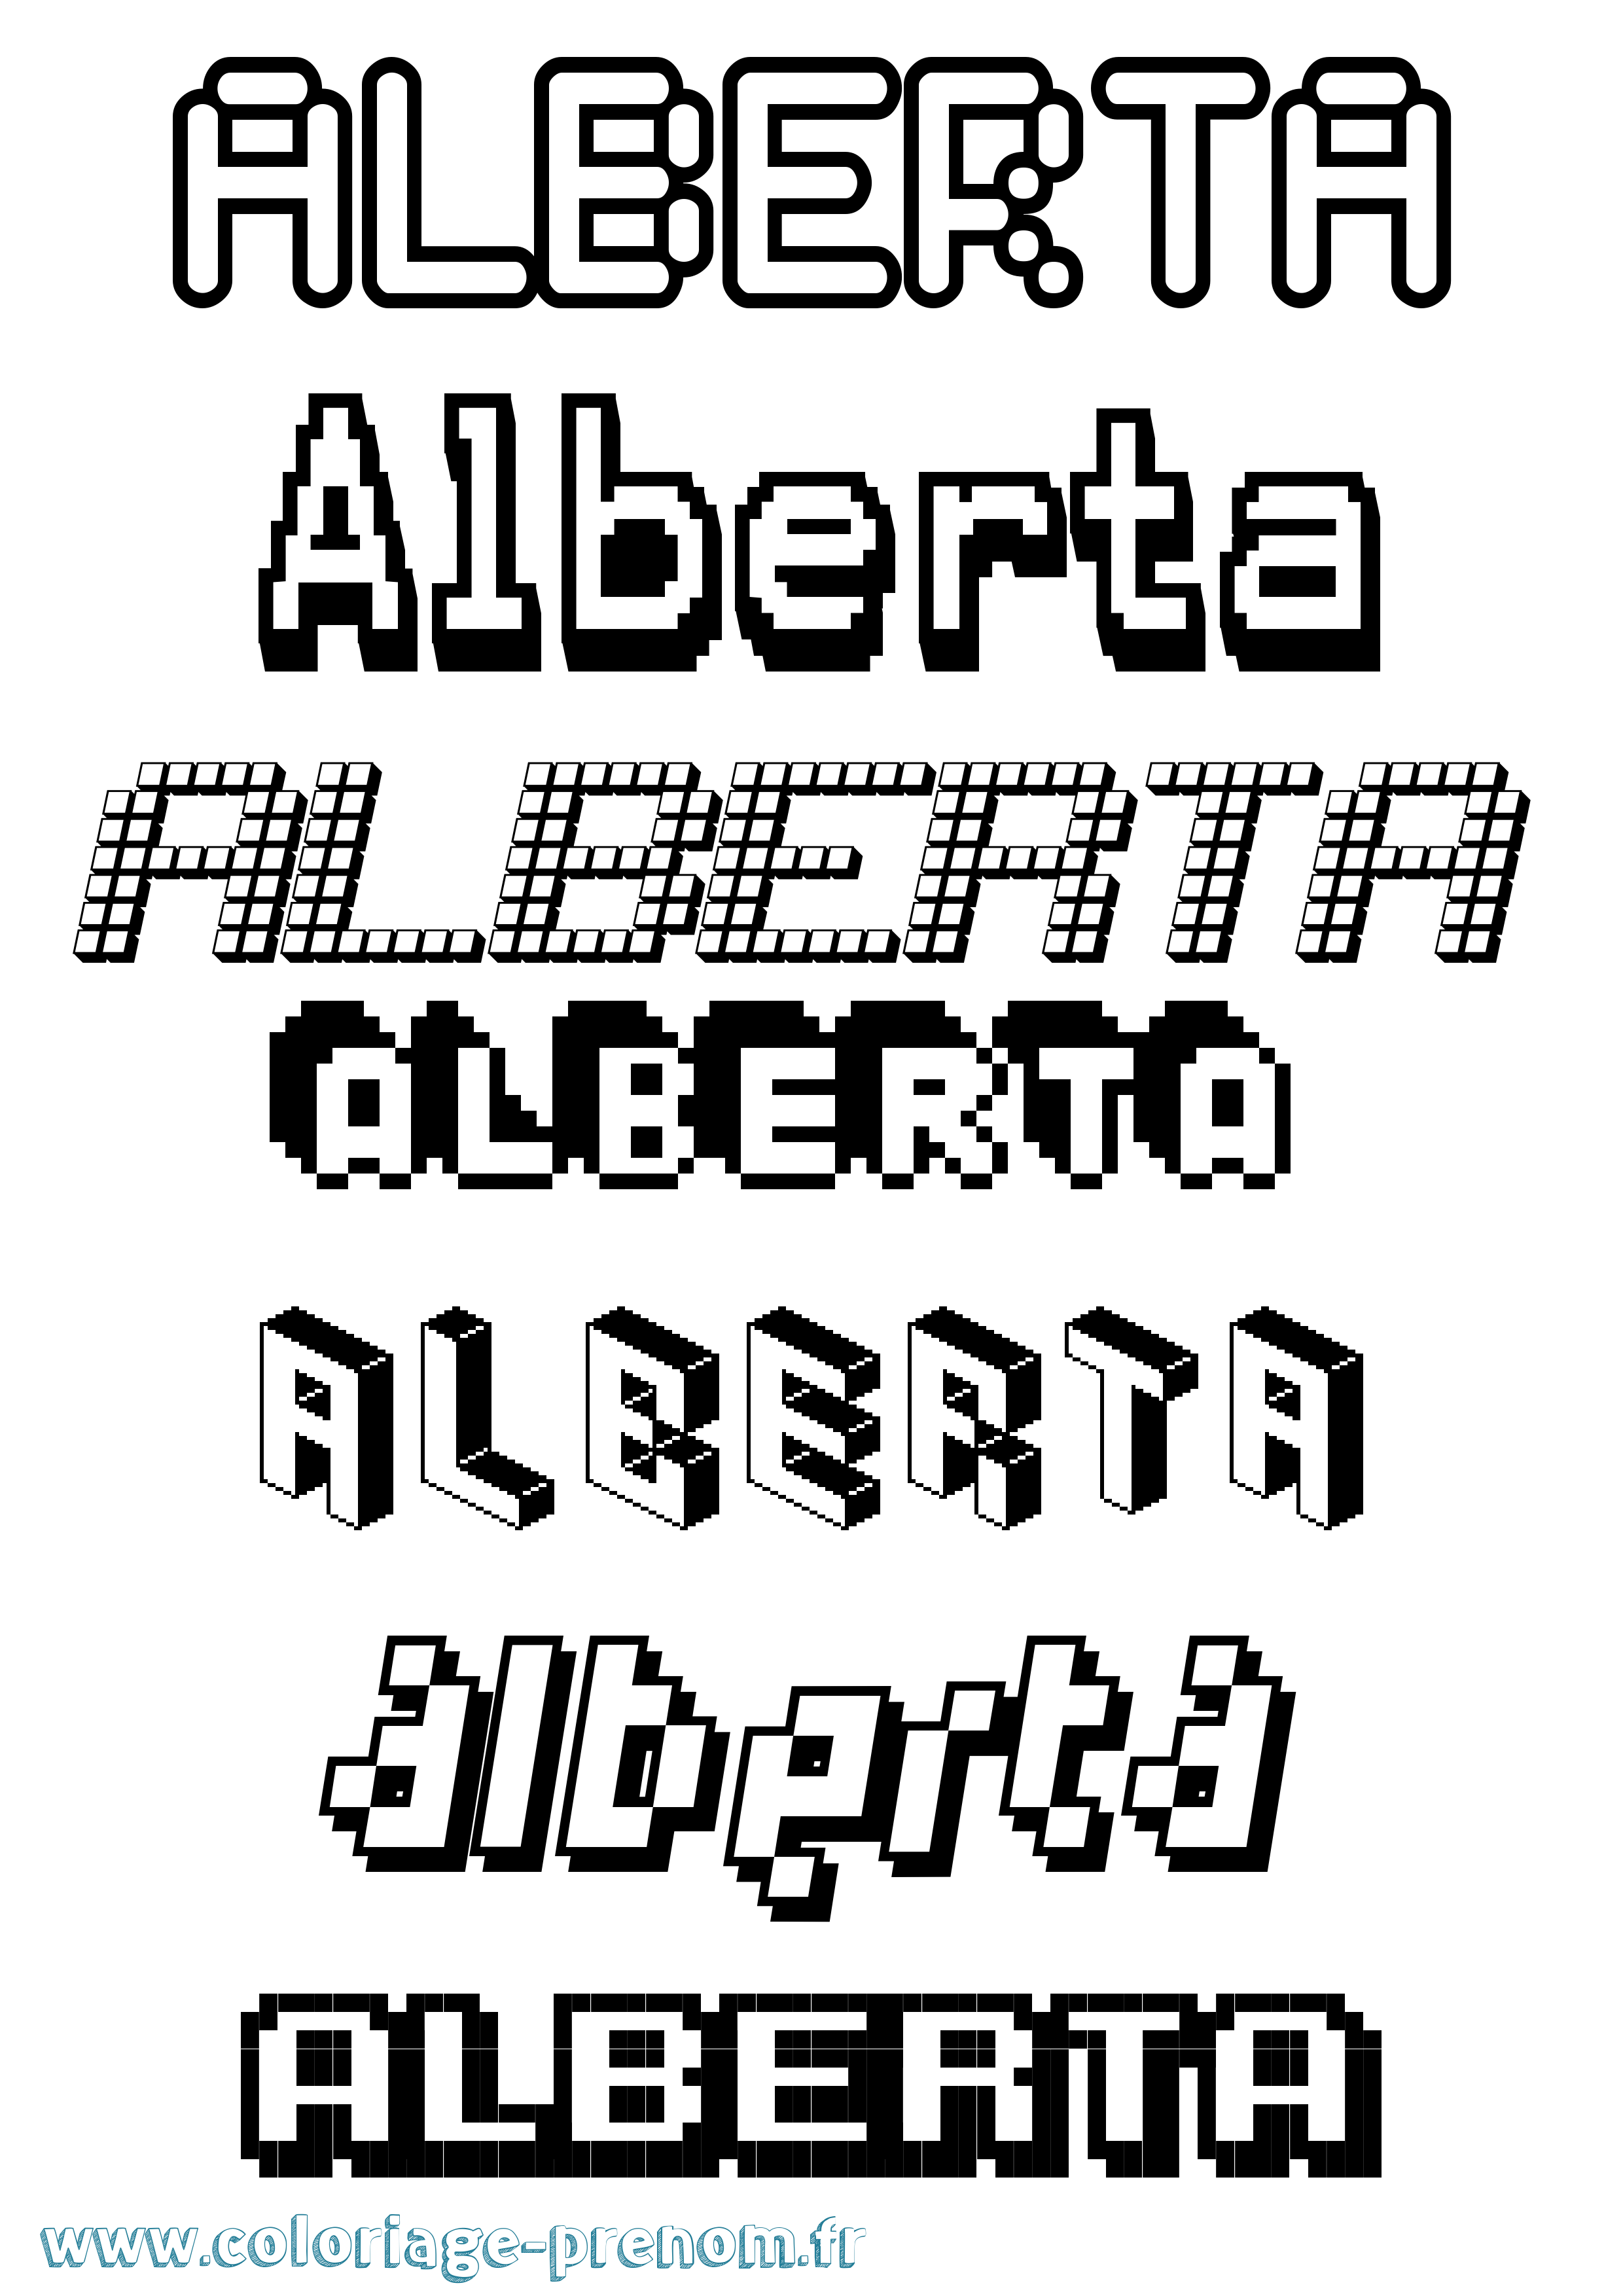 Coloriage prénom Alberta Pixel